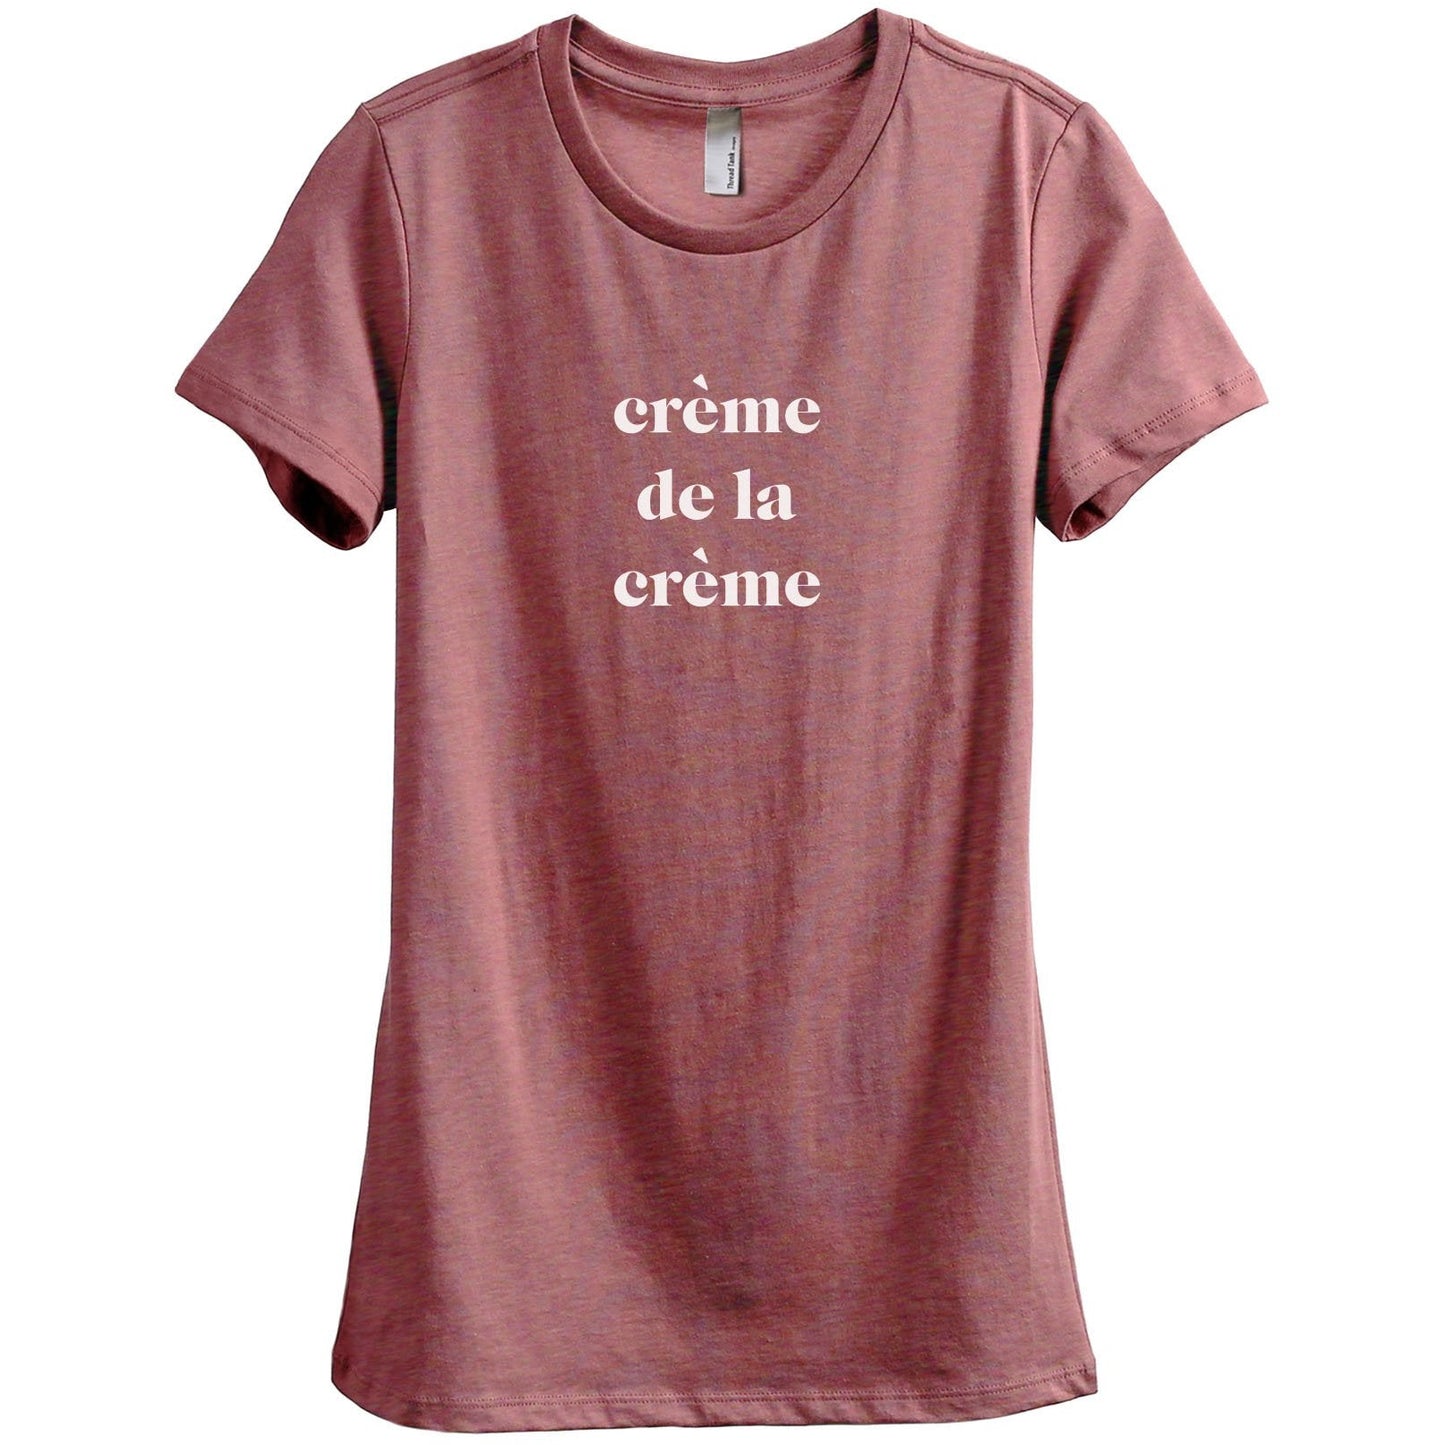 Creme De La Creme - Thread Tank | Stories You Can Wear | T-Shirts, Tank Tops and Sweatshirts